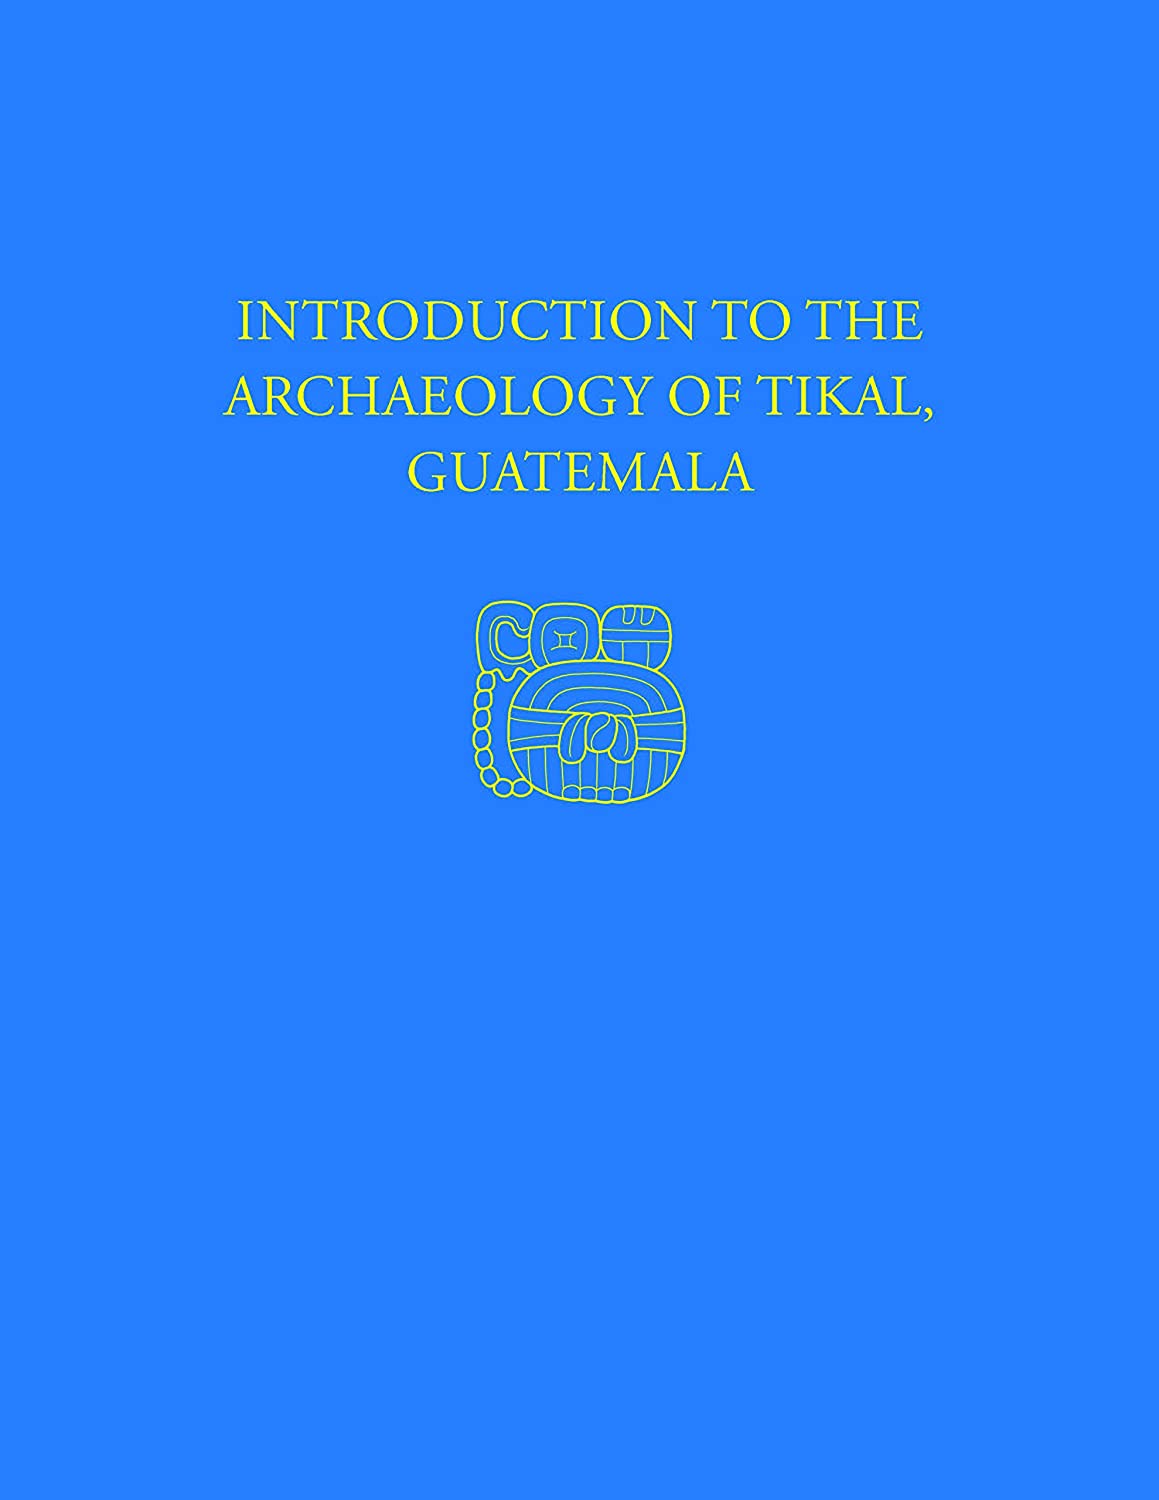 Introduction to the Archaeology of Tikal, Guatemala: Tikal Report 12 (University Museum Monograph)